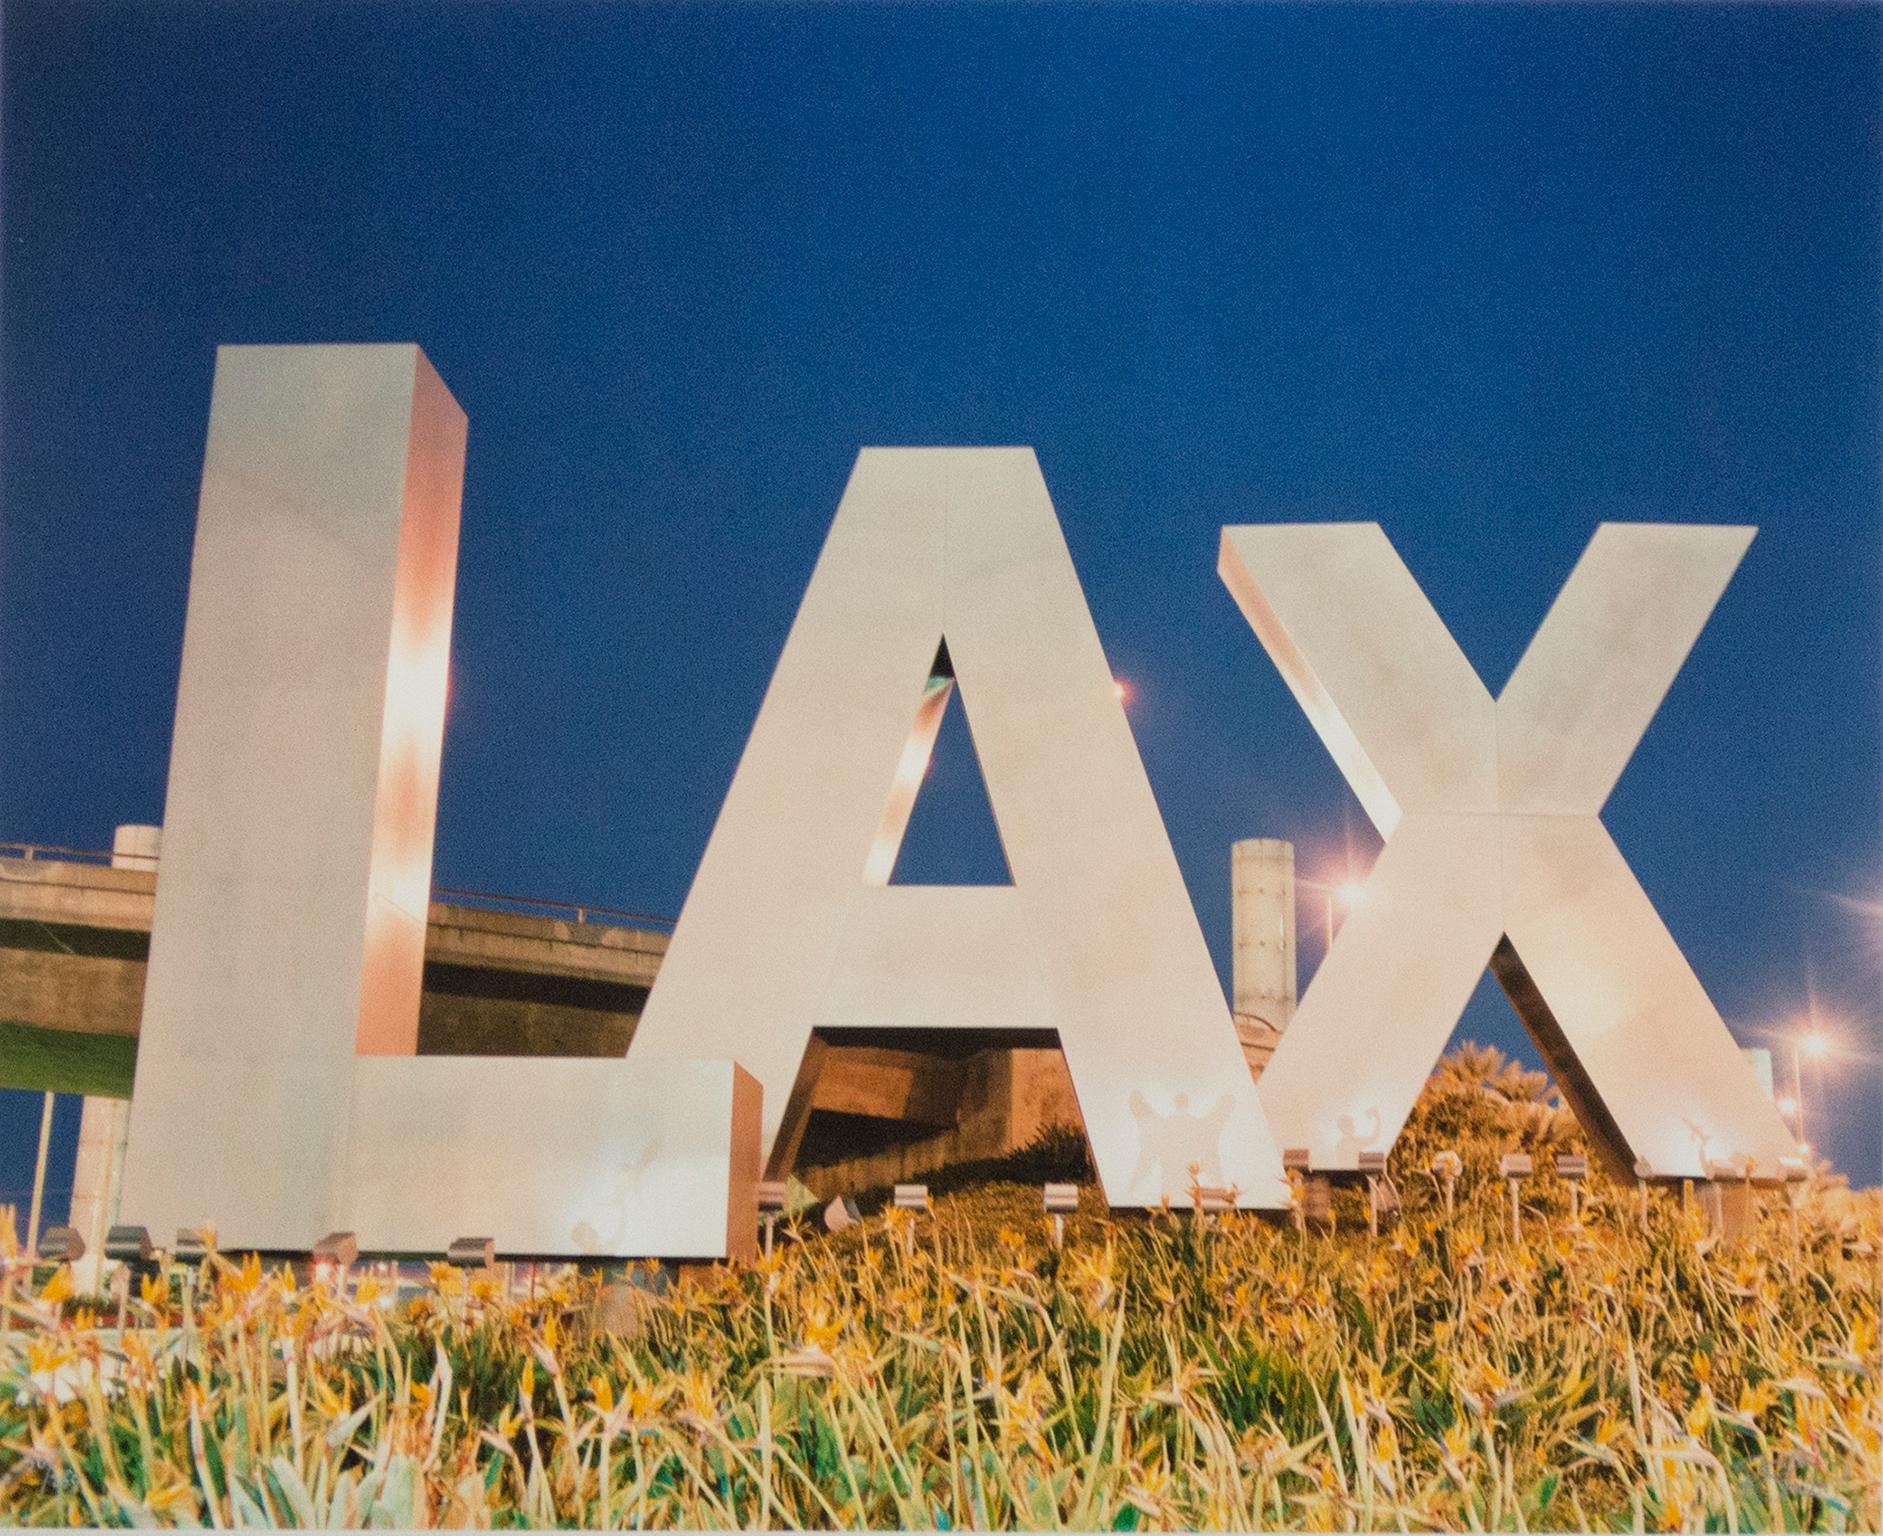 "The History of Flight (Upon the LAX Sign), " Photograph by Robert Kawika Sheer